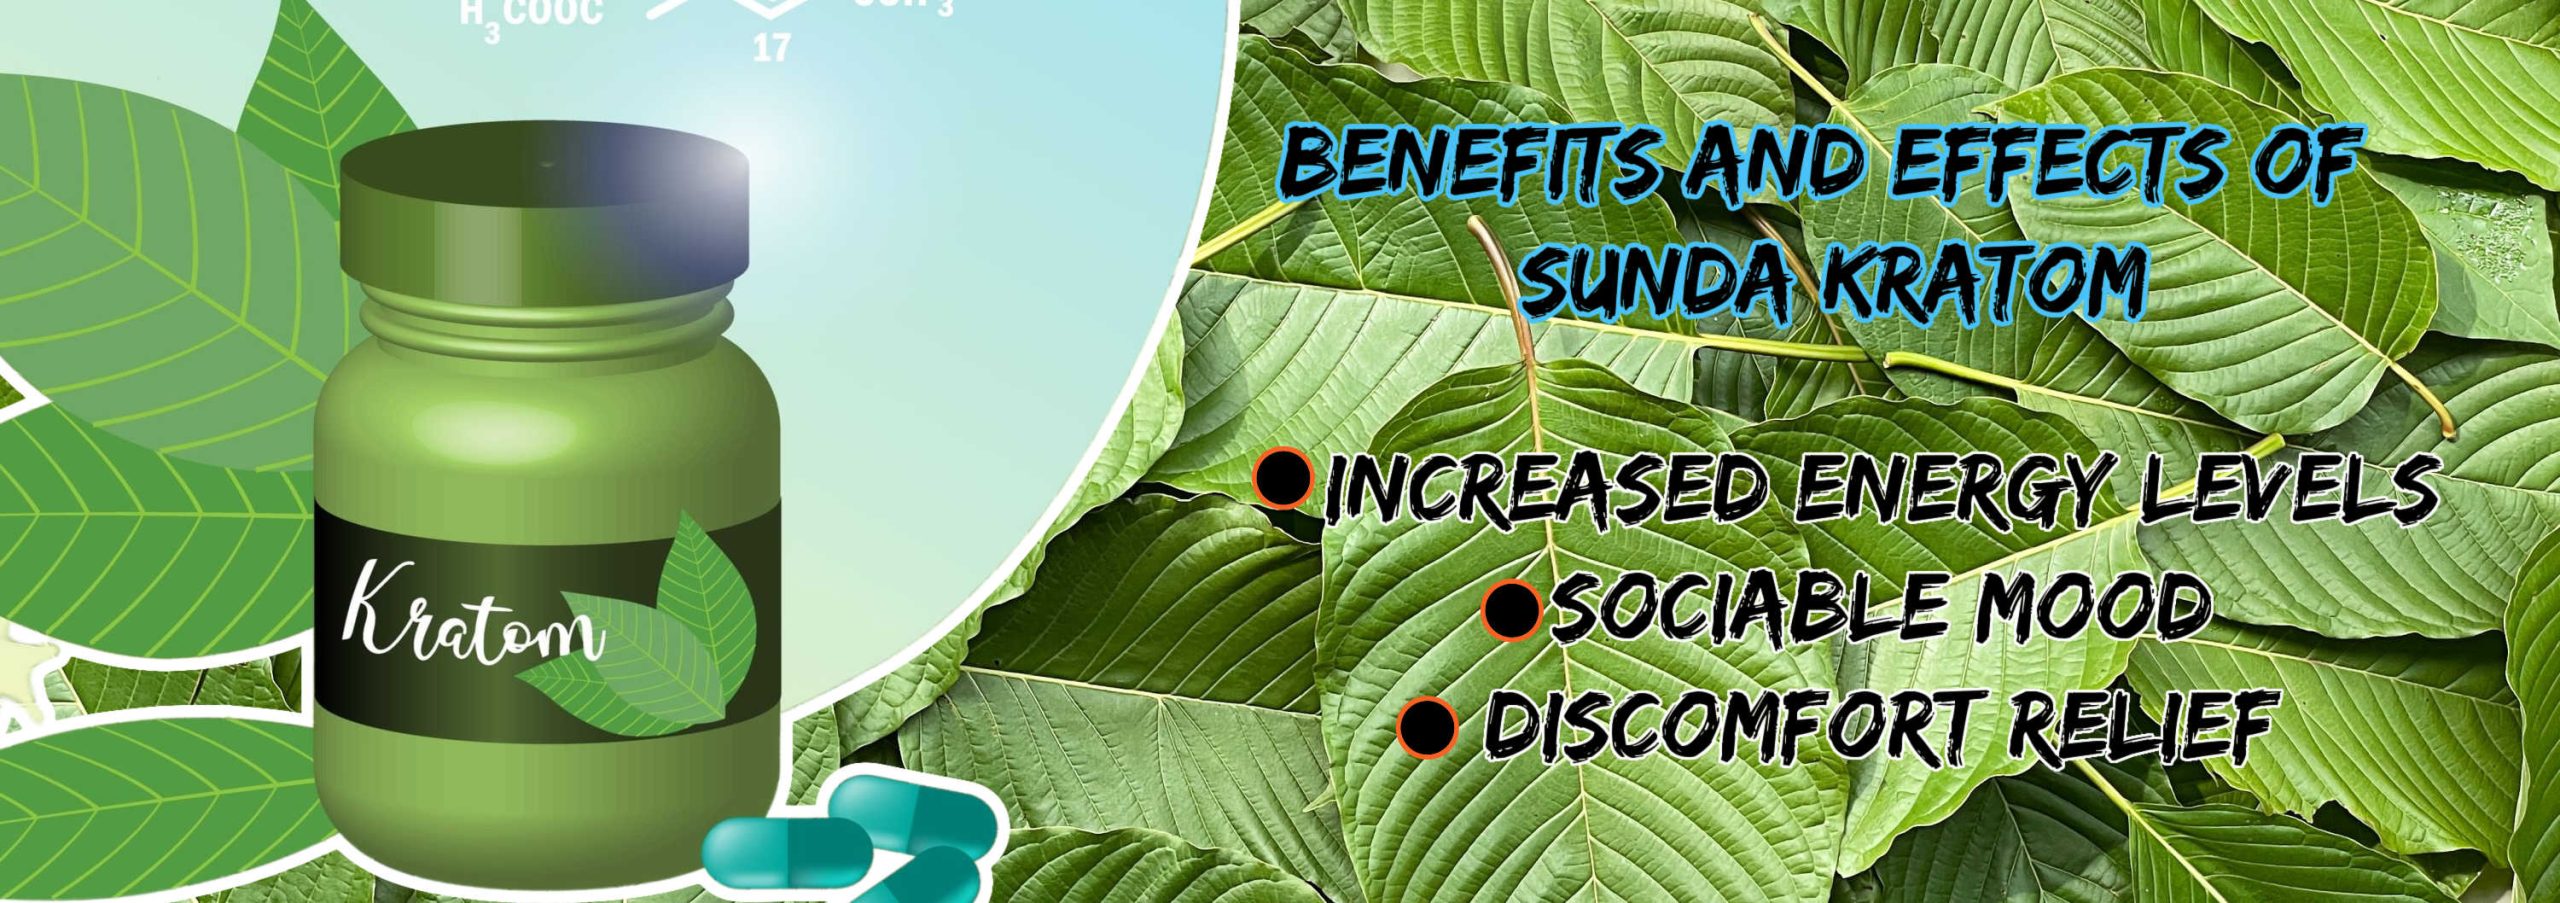 image of benefits and effects of sunda kratom